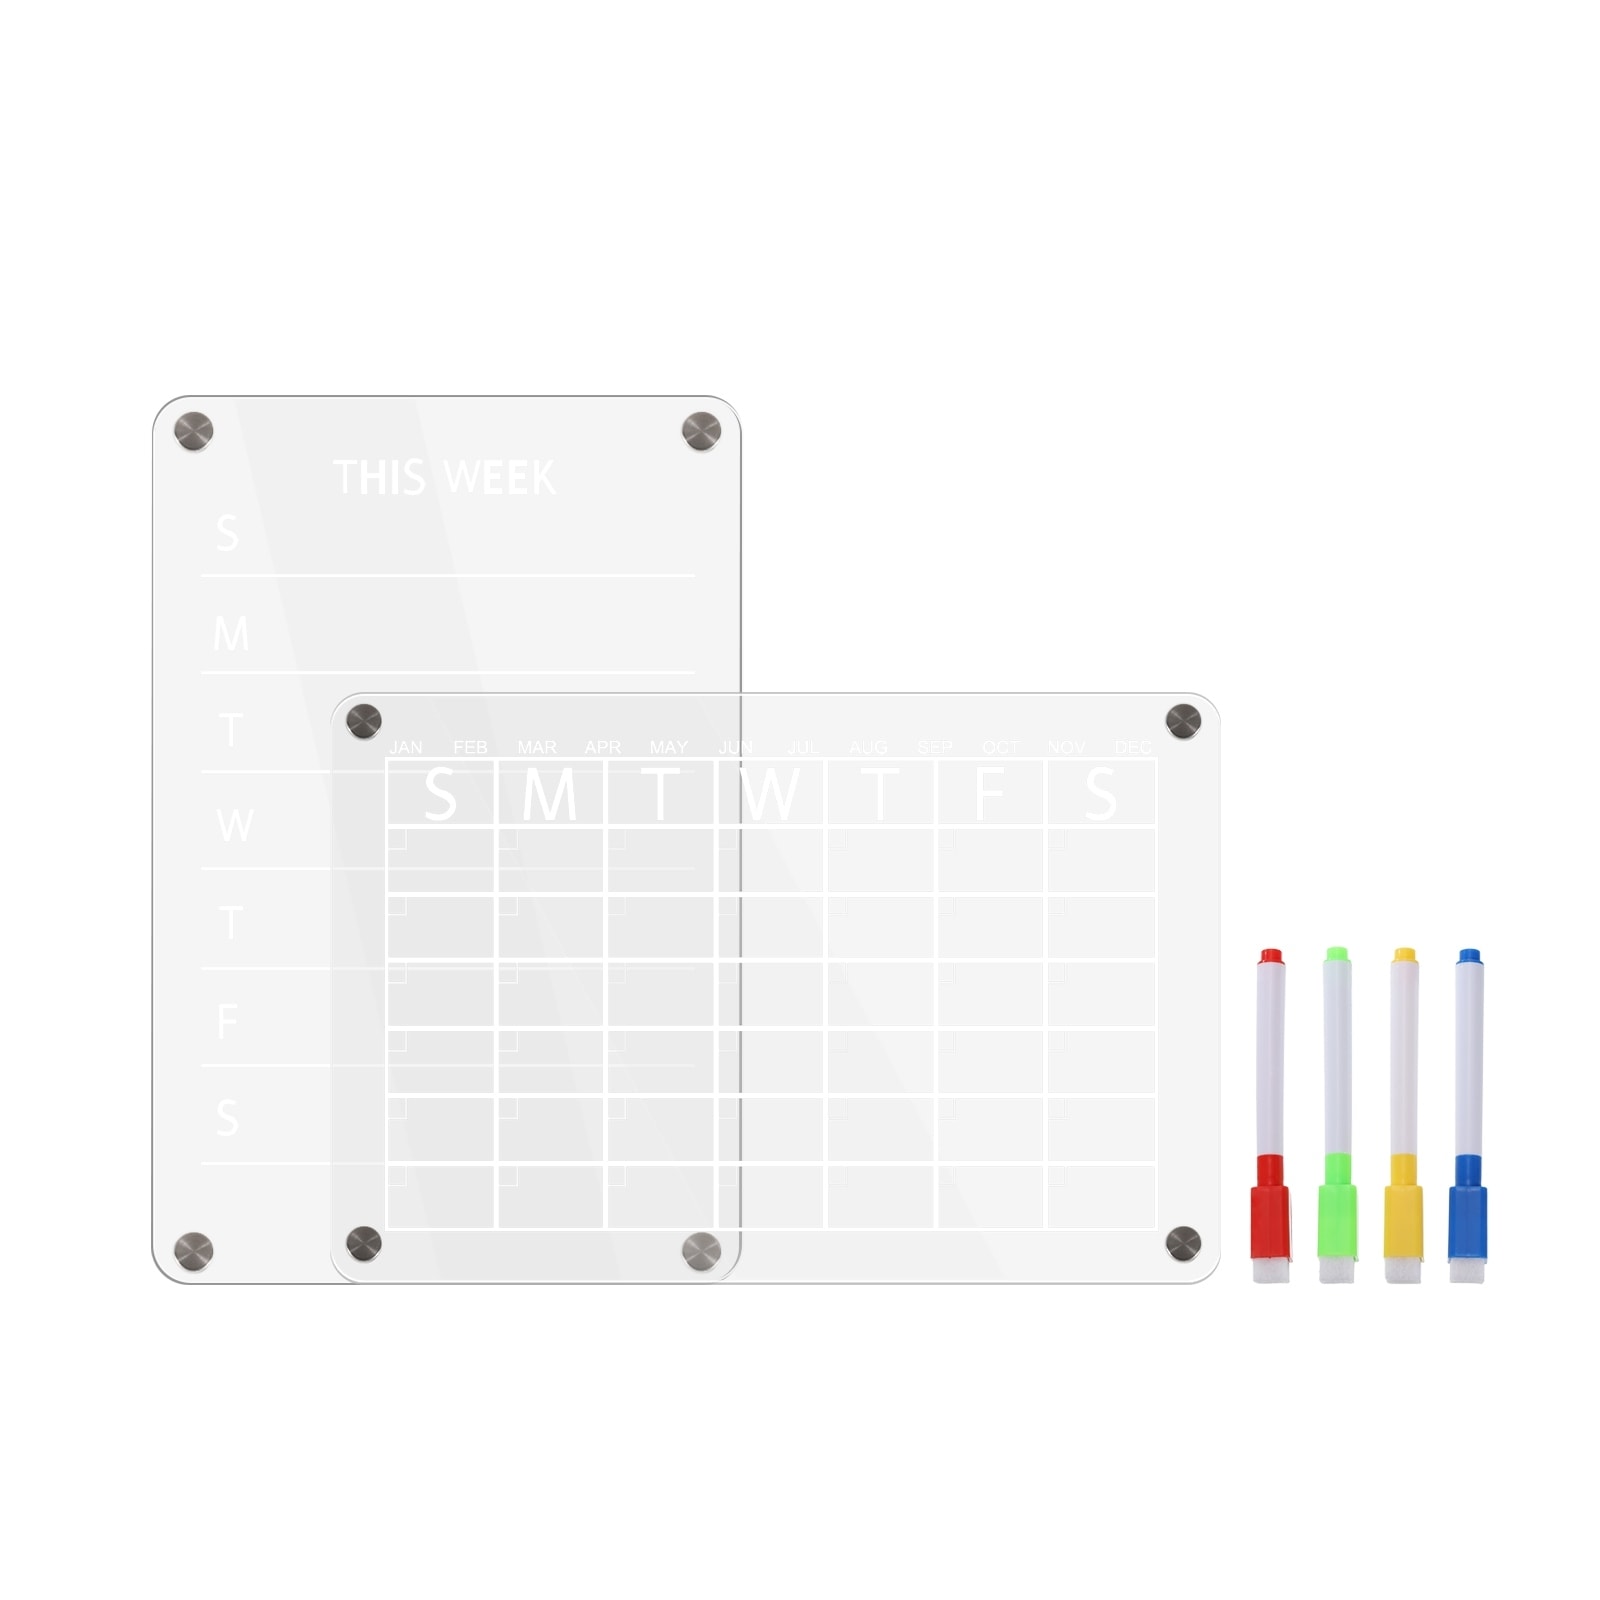 Liquid Chalk Markers for Acrylic Fridge Calendar Planning Board Clear Glass Dry Erase Board Refrigerator Whiteboard for Window/Mirror, 14 Pack, 7